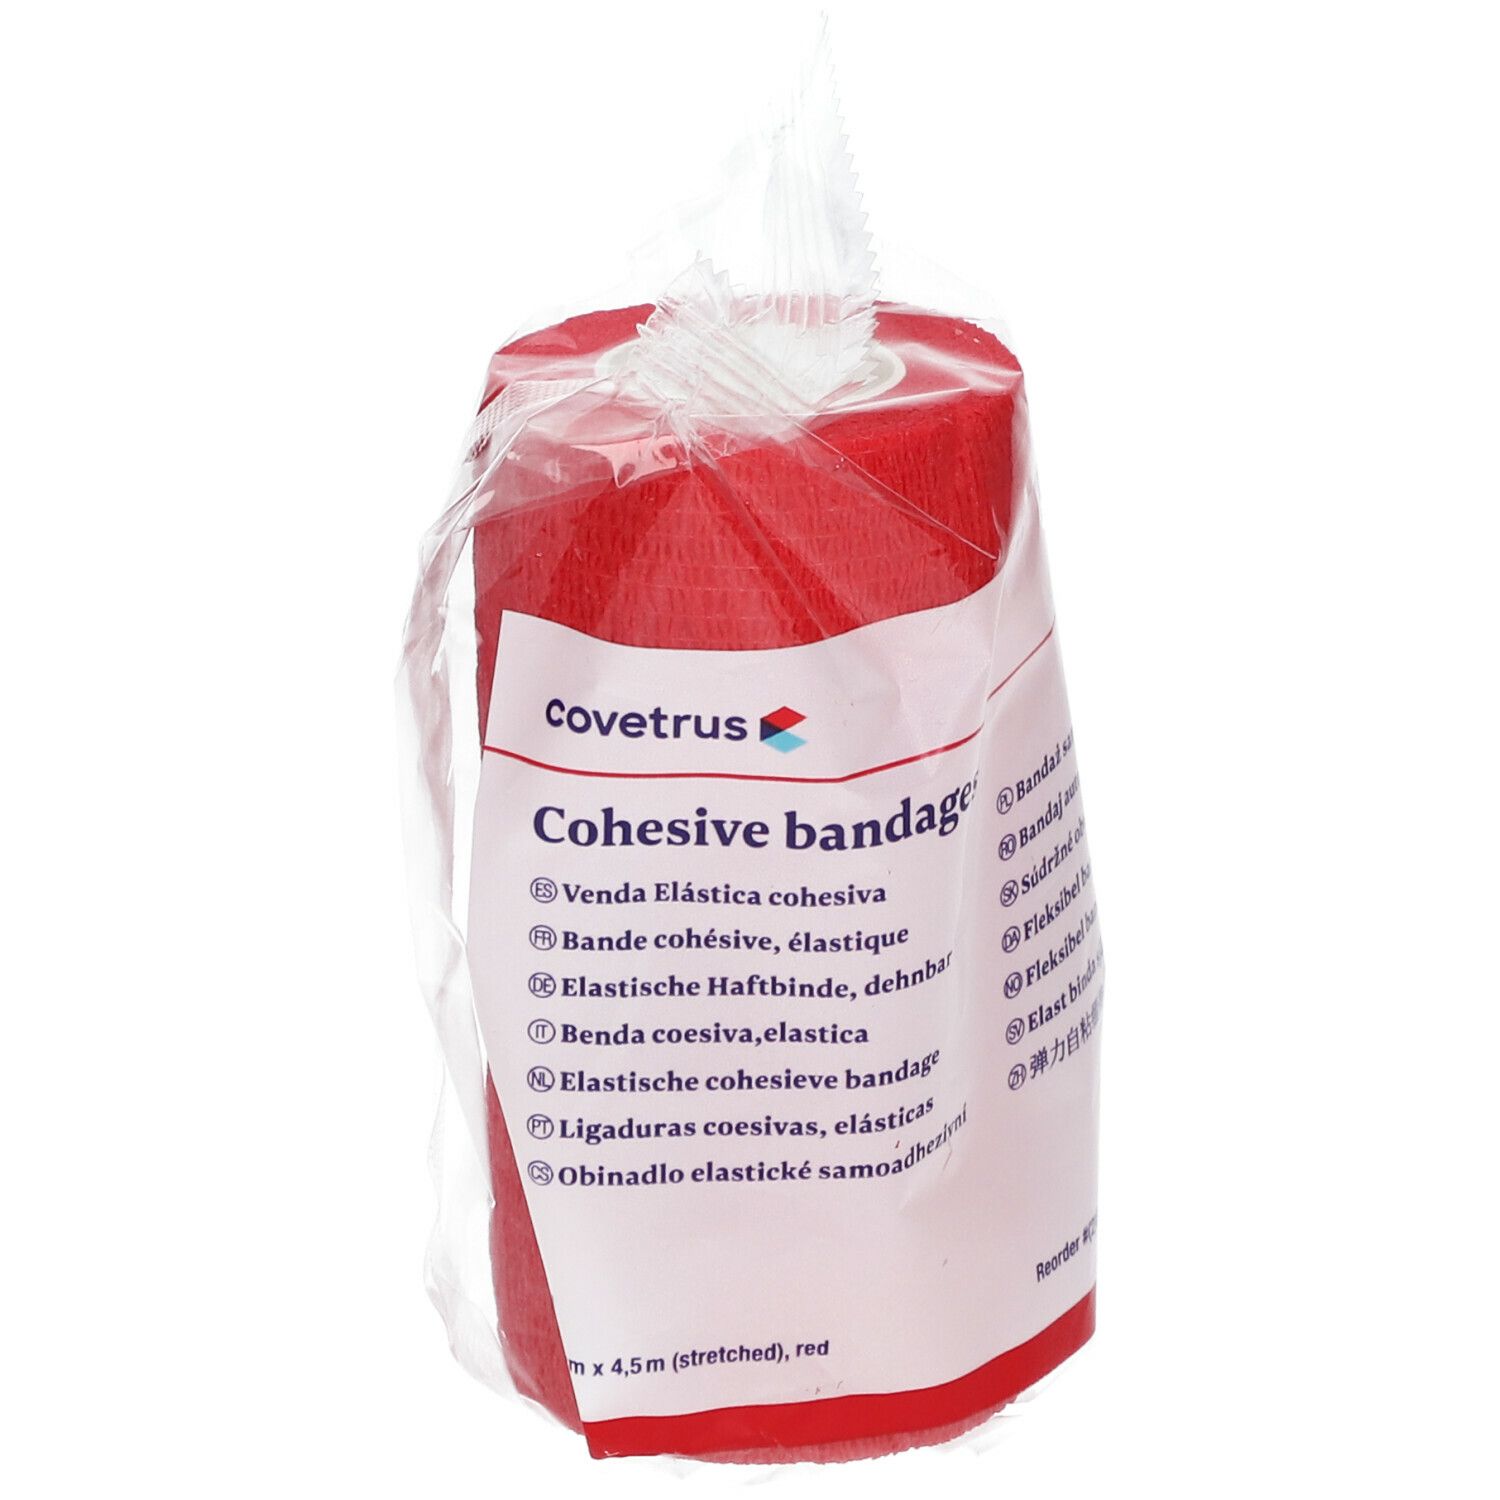 covetrus Cohesive bandages 10cm x 4,5m red